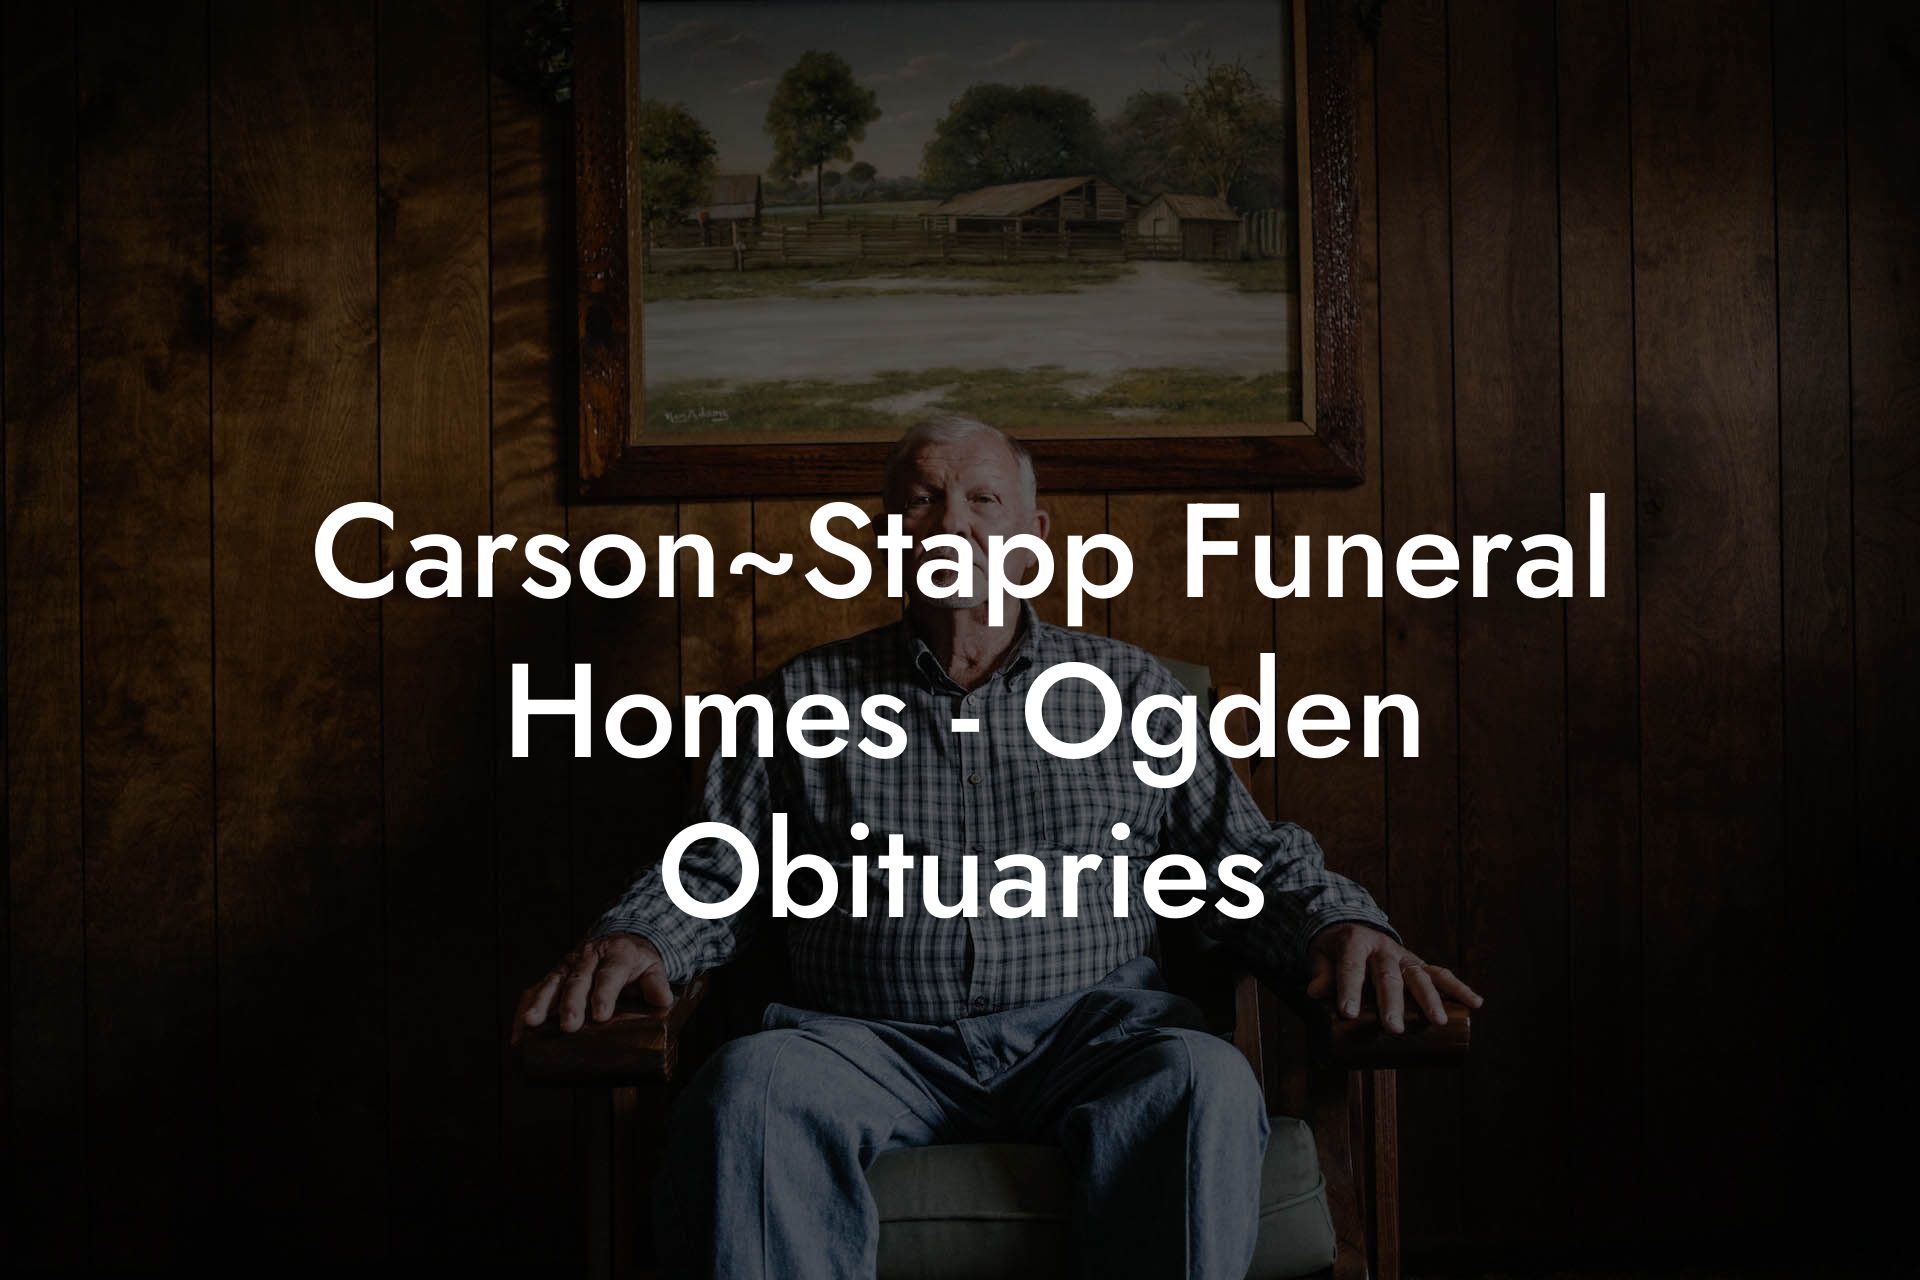 Carson~Stapp Funeral Homes - Ogden Obituaries